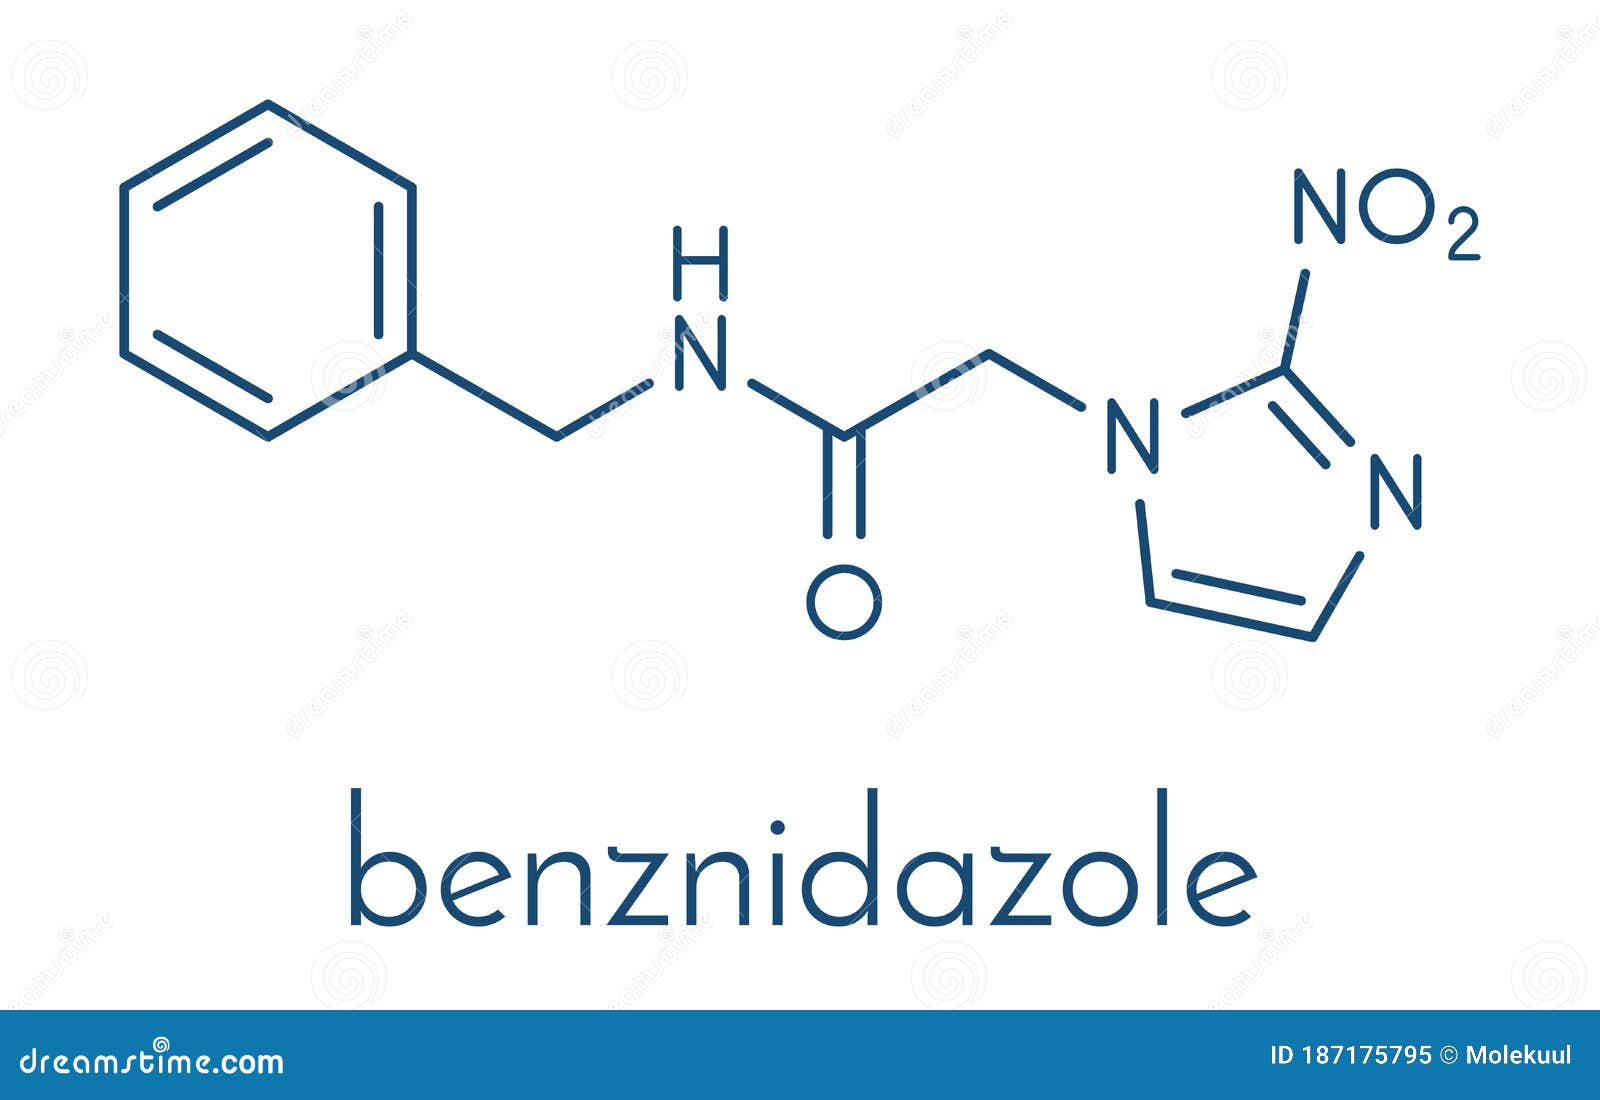 benznidazole antiparasitic drug molecule. used in treatment of chagas disease trypanosoma cruzi. skeletal formula.